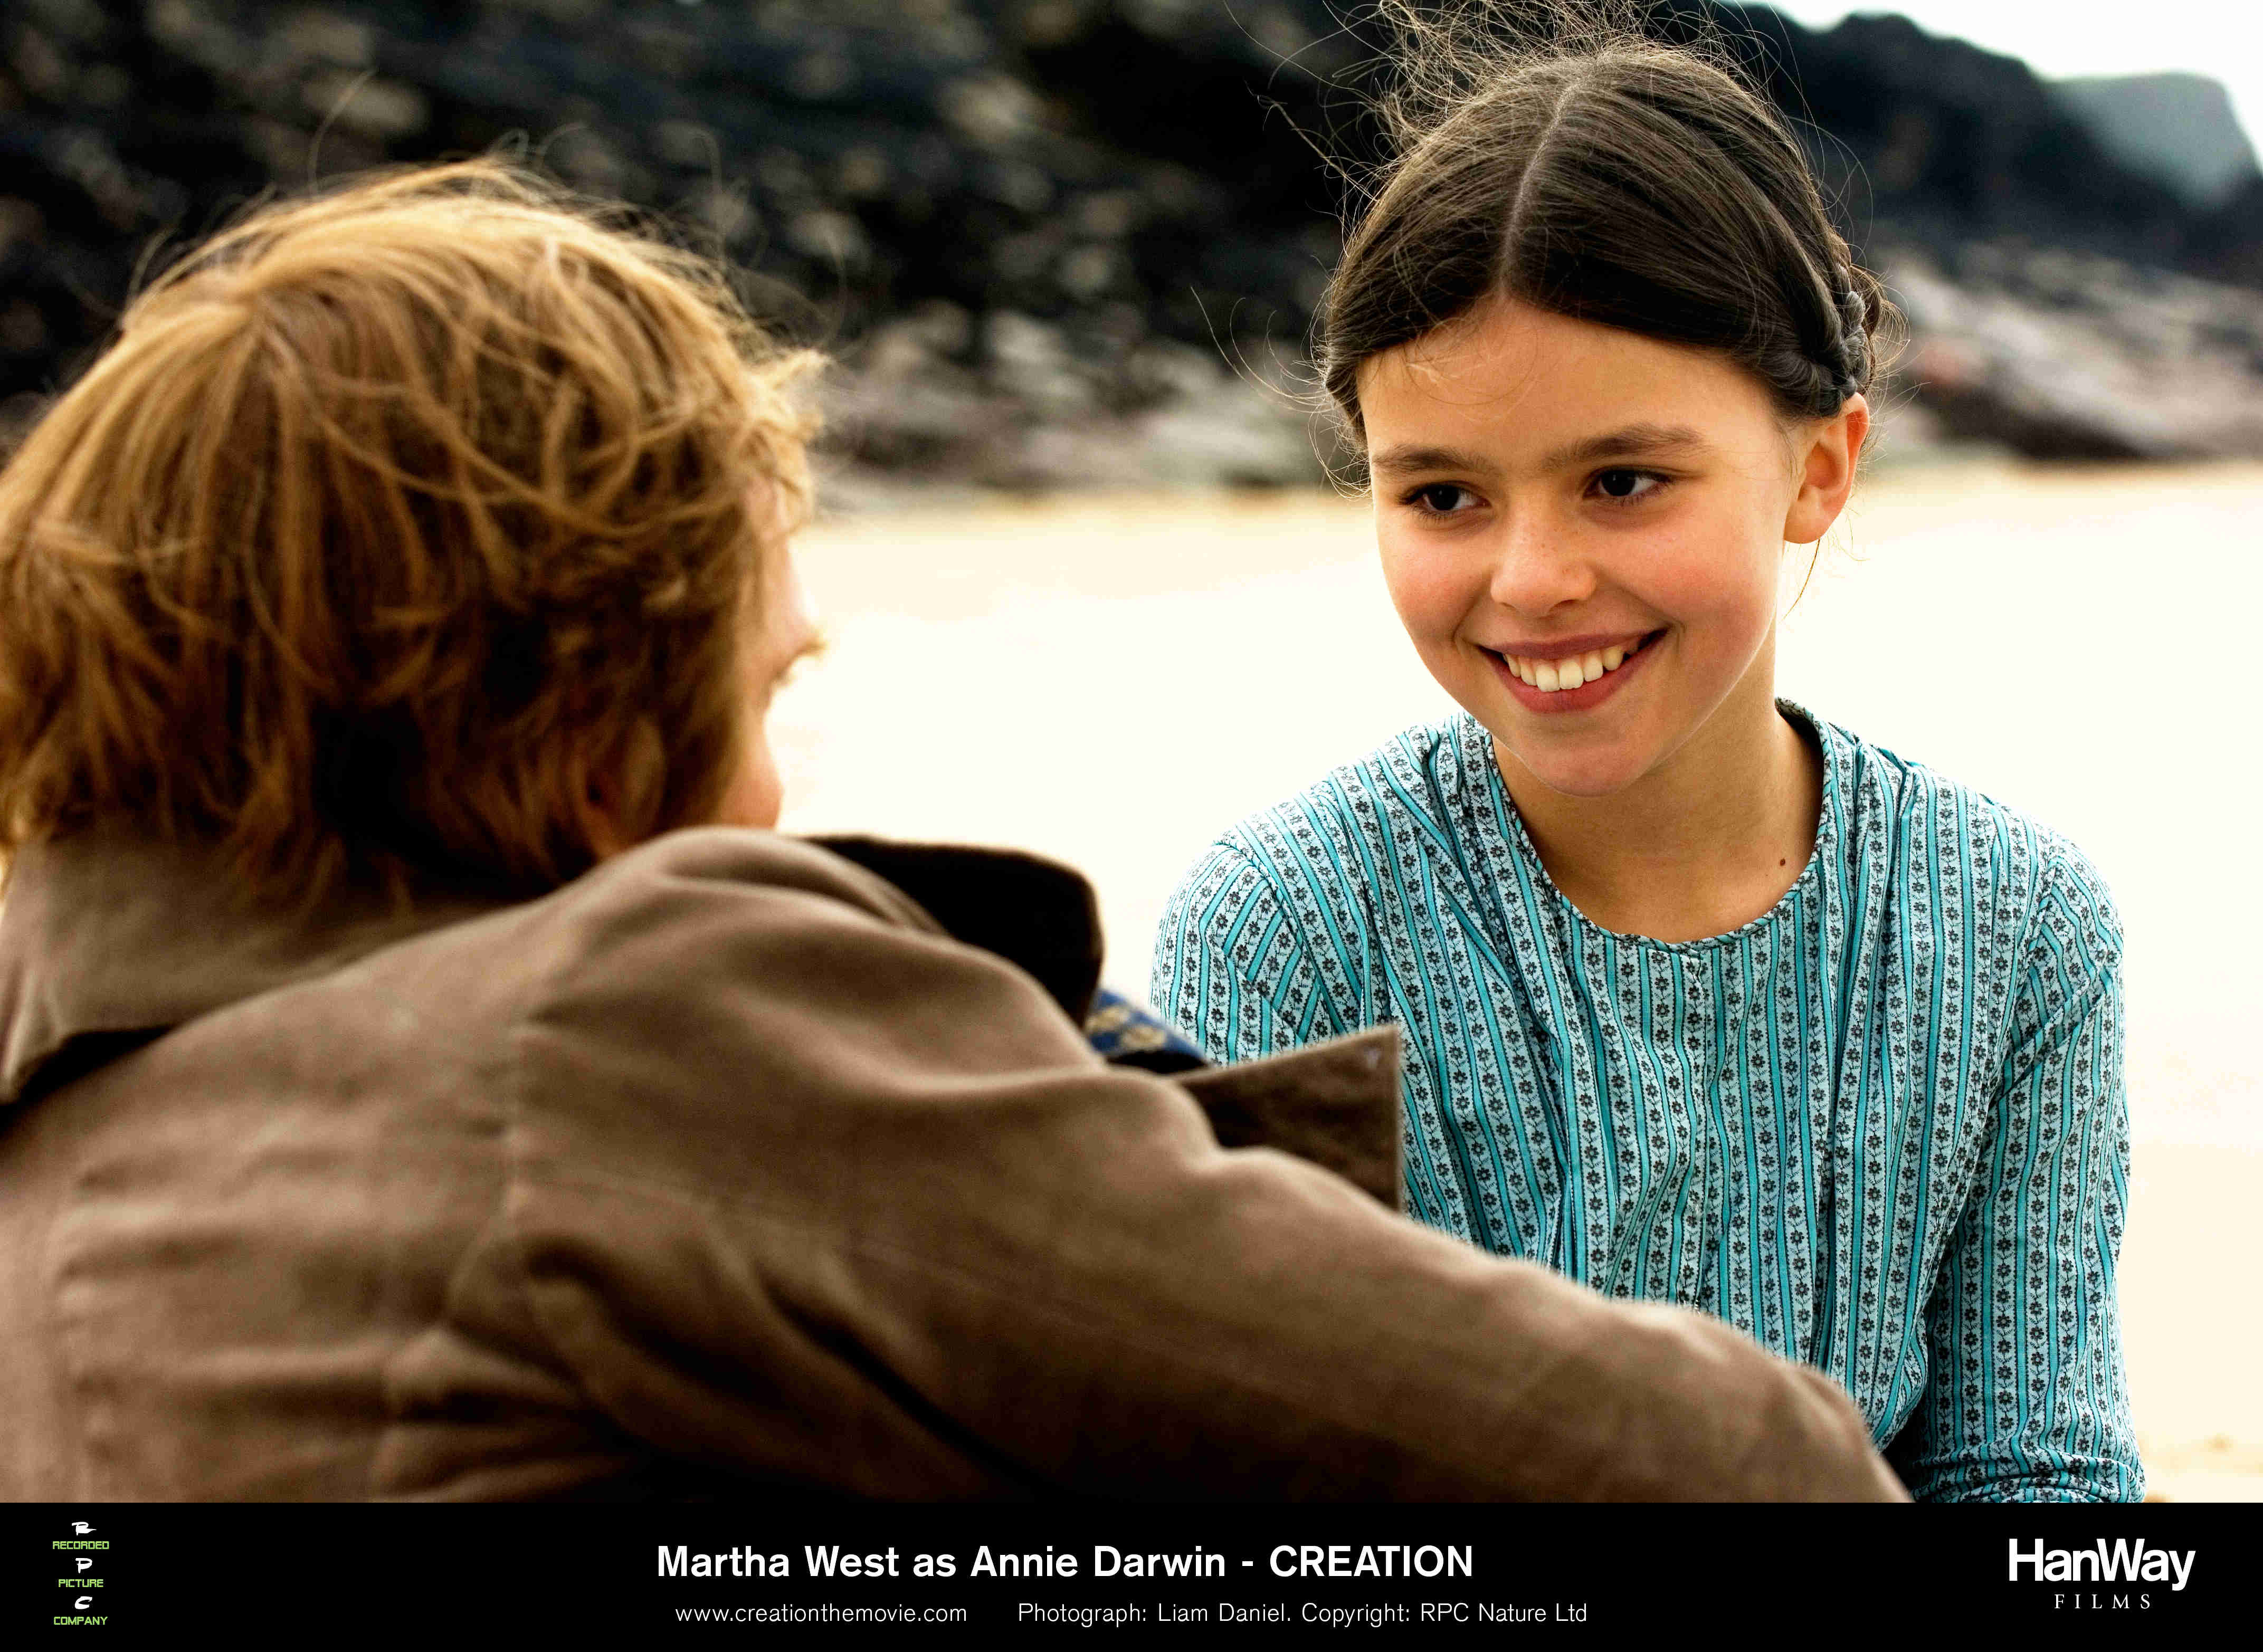 Martha West stars as Annie Darwin in Newmarket Films' Creation (2010). Photo credit by Liam Daniel.